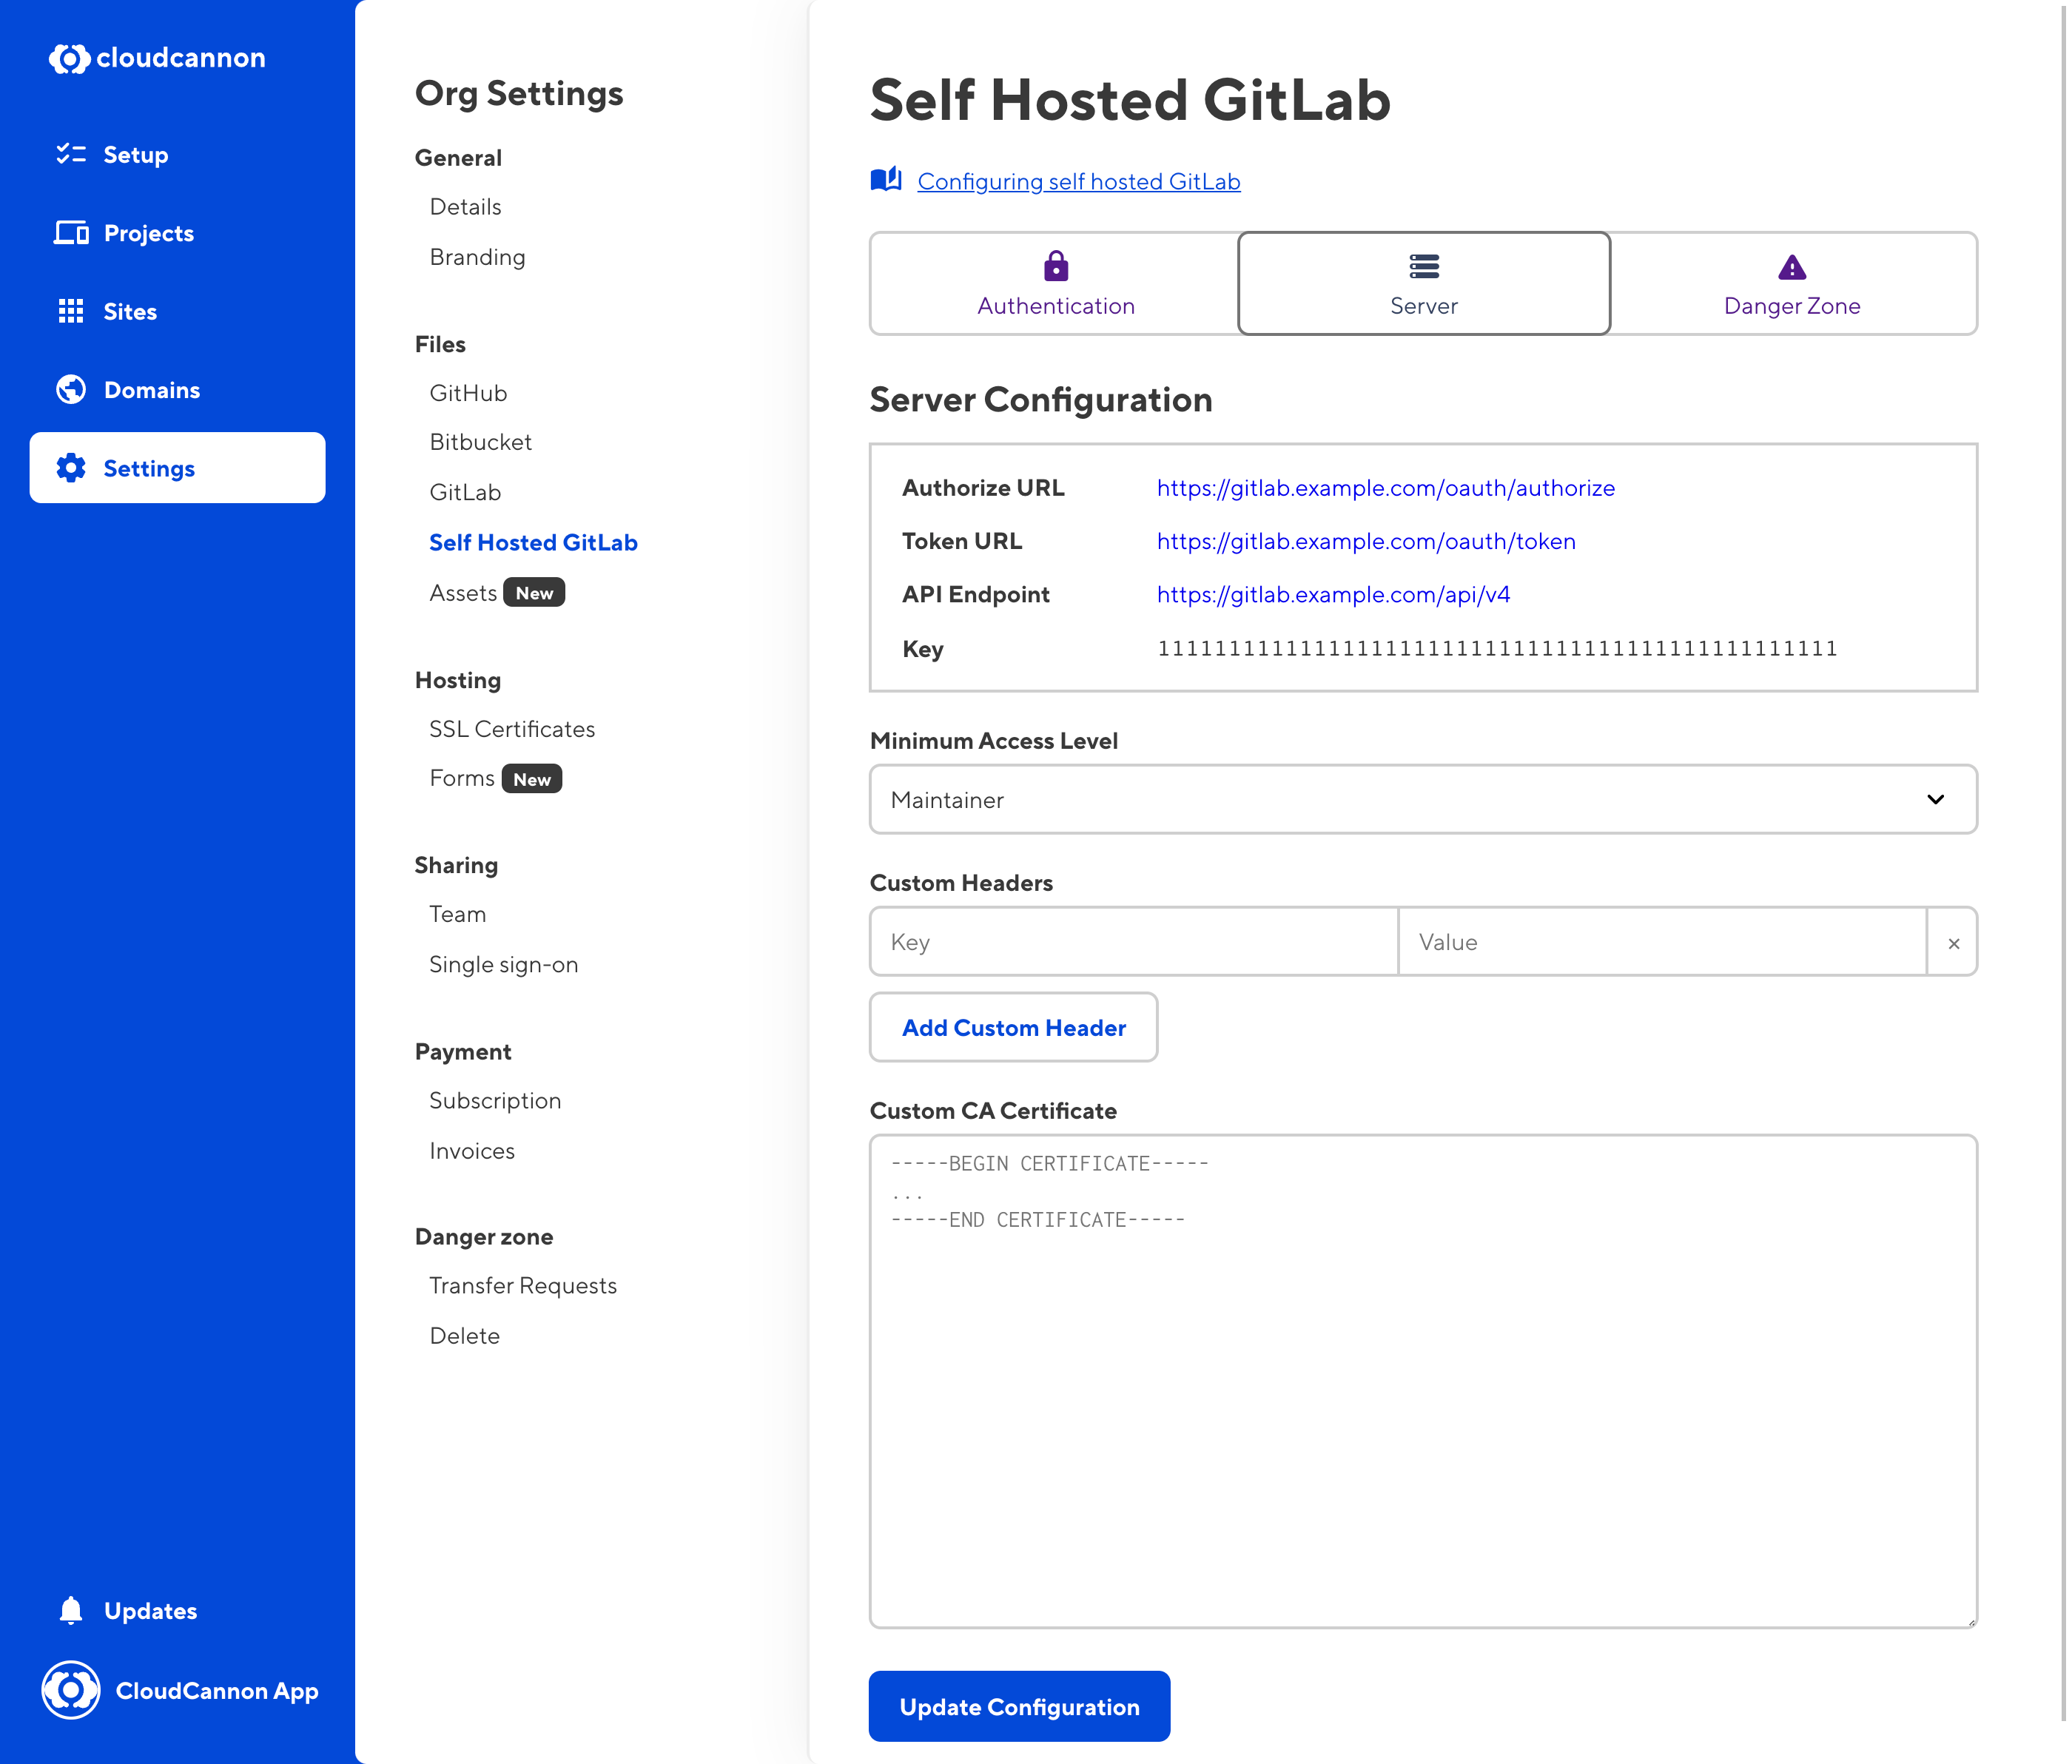 Self Hosted GitLab settings interface